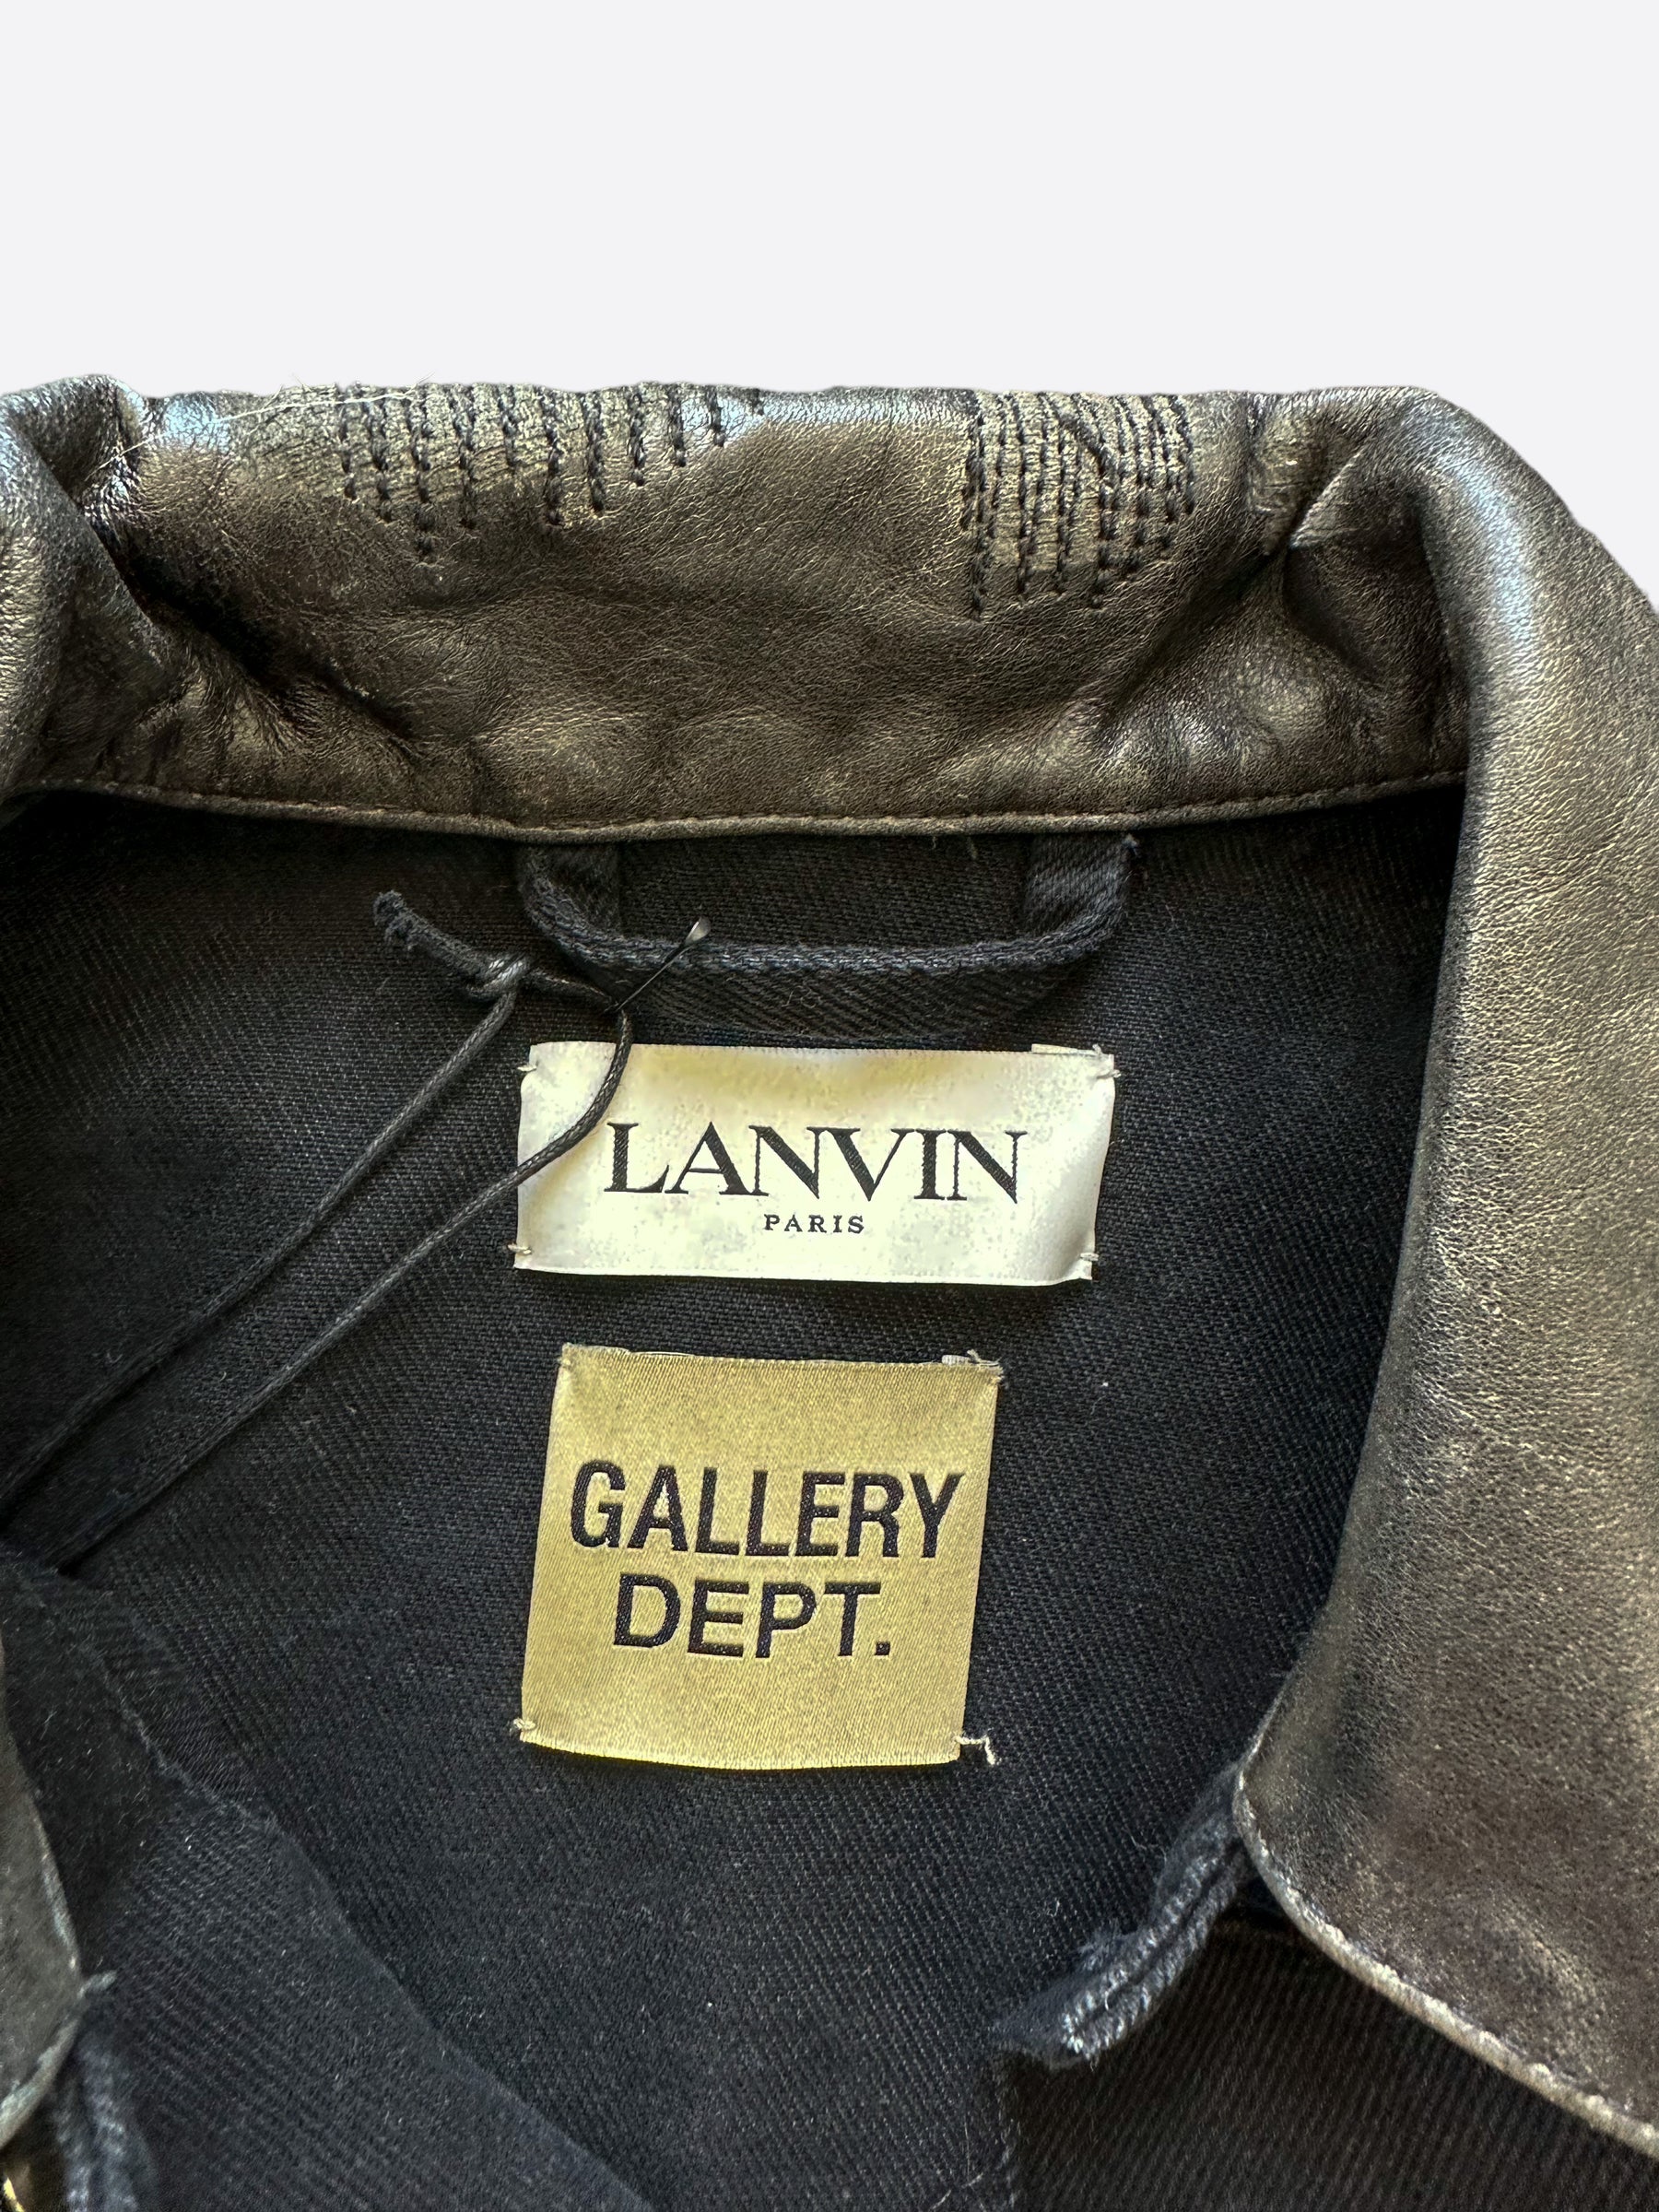 Gallery Dept Lanvin Black Oil Stain Denim Jacket